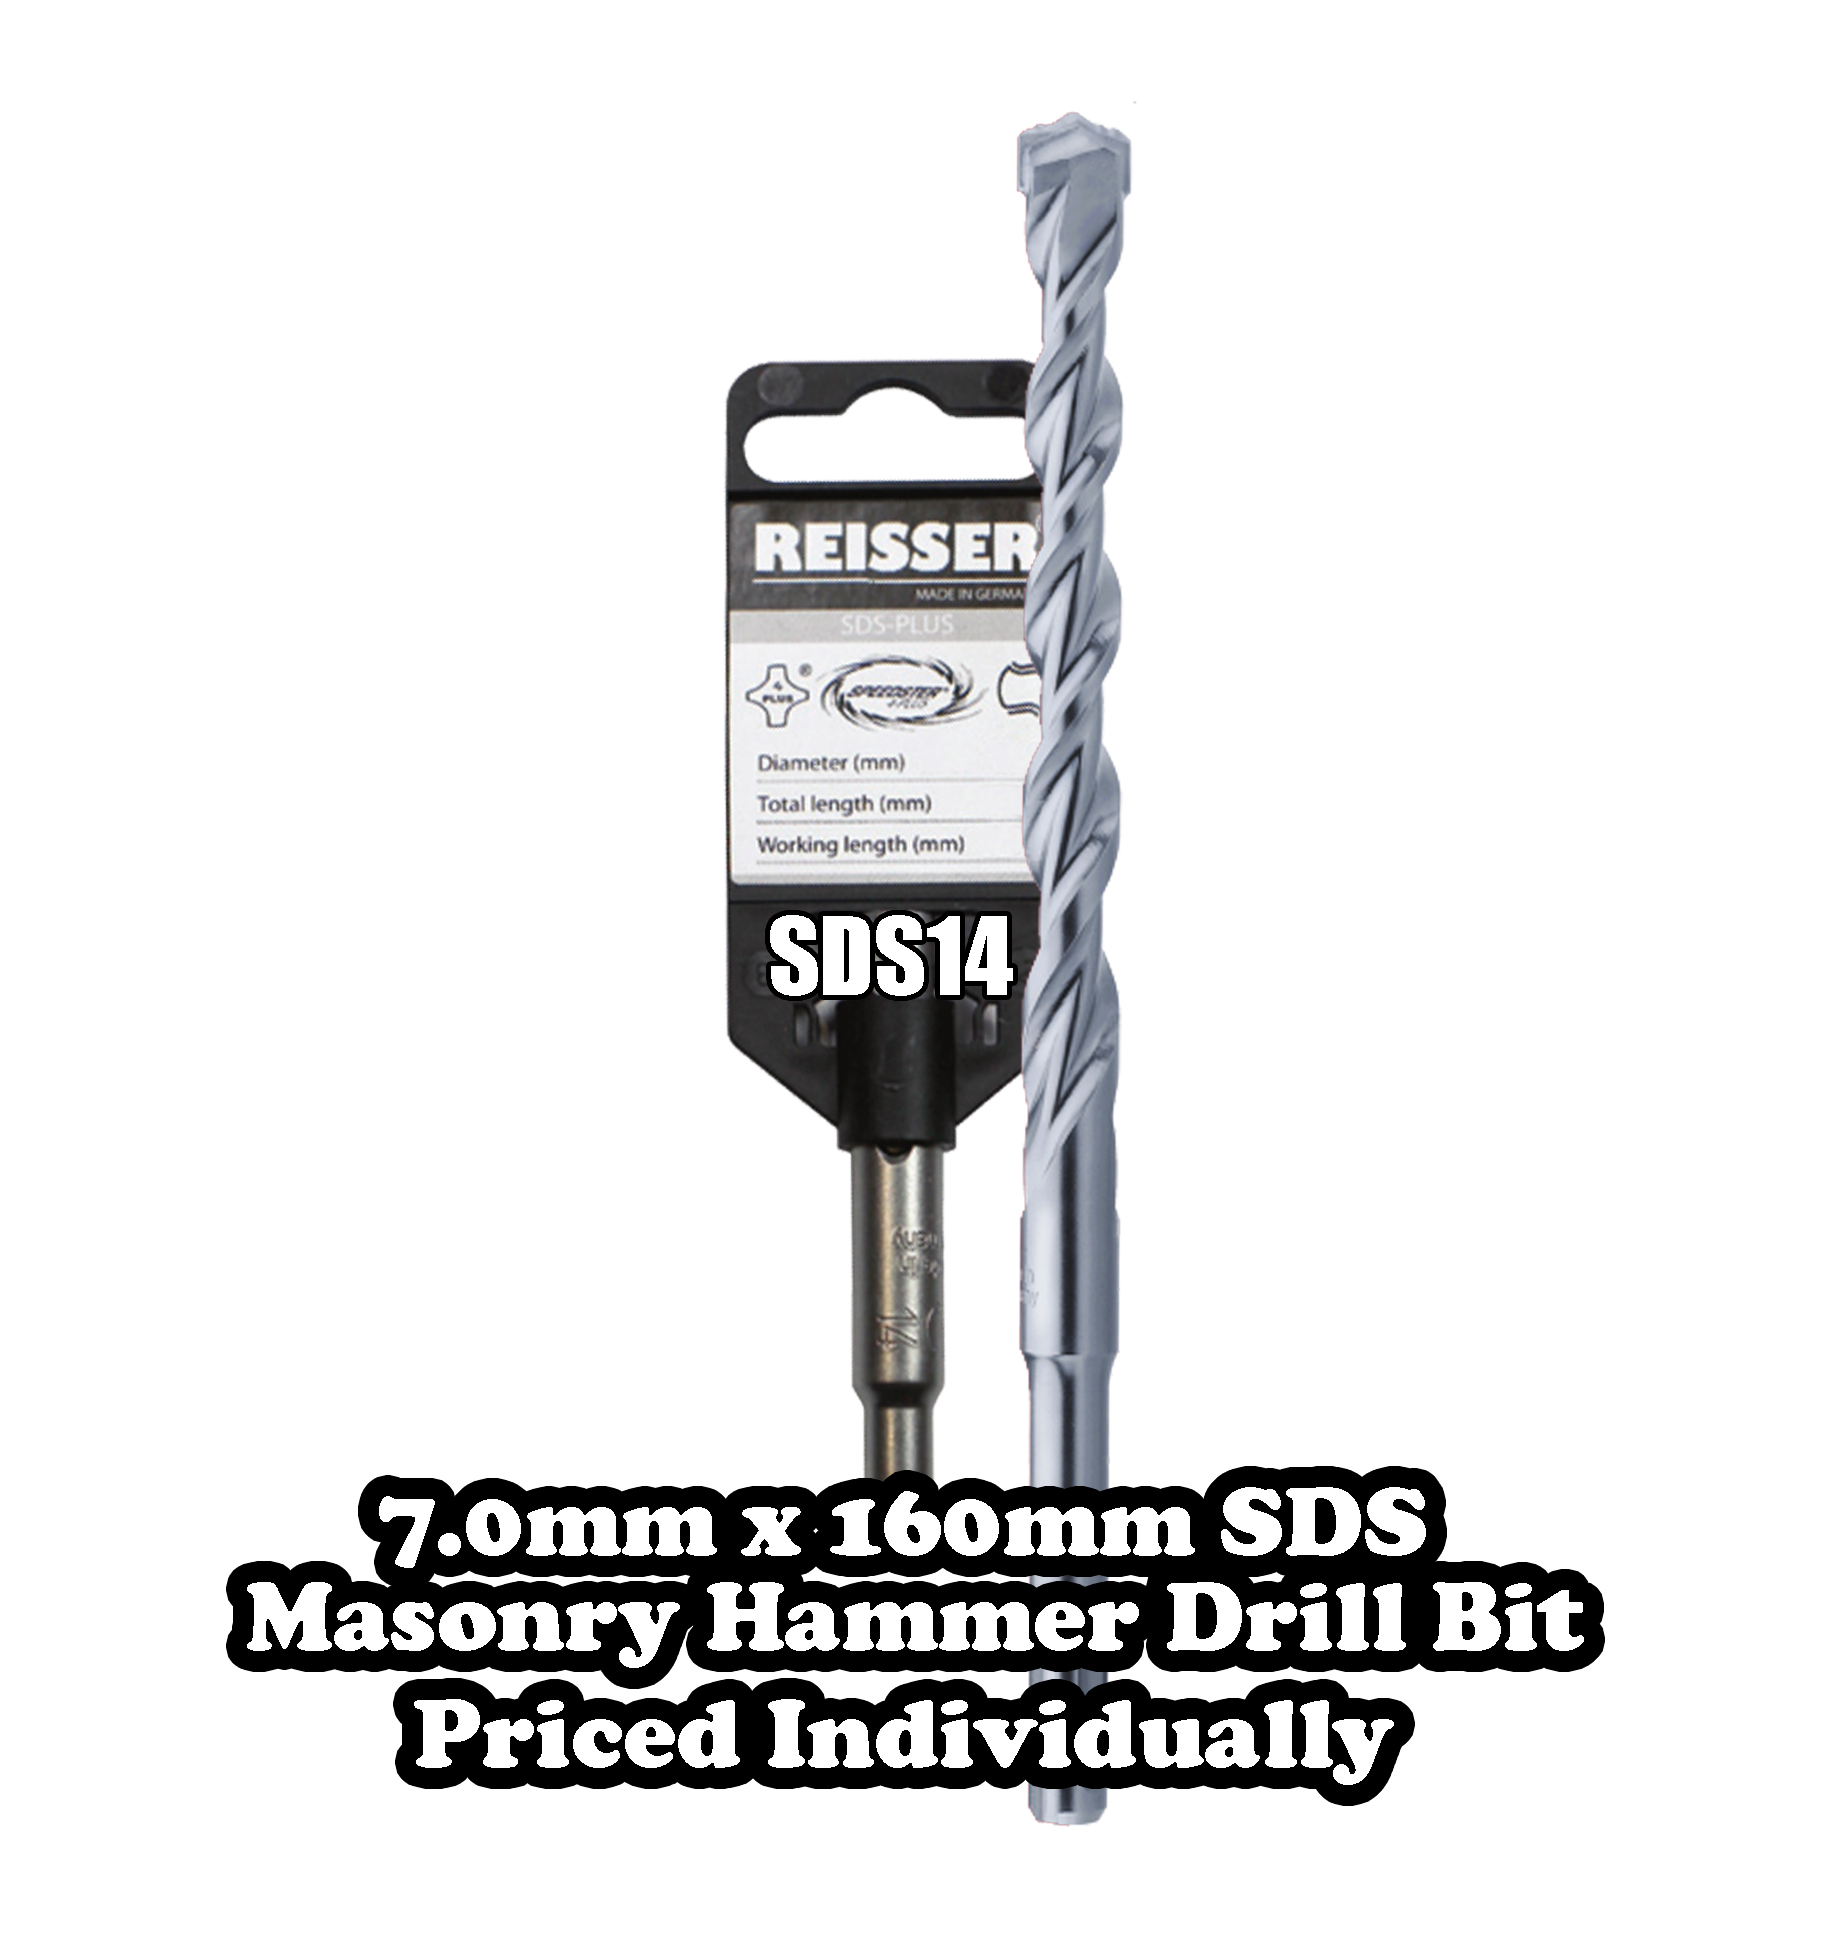 7.0mm x 160mm SDS Masonry Hammer Drill Bit